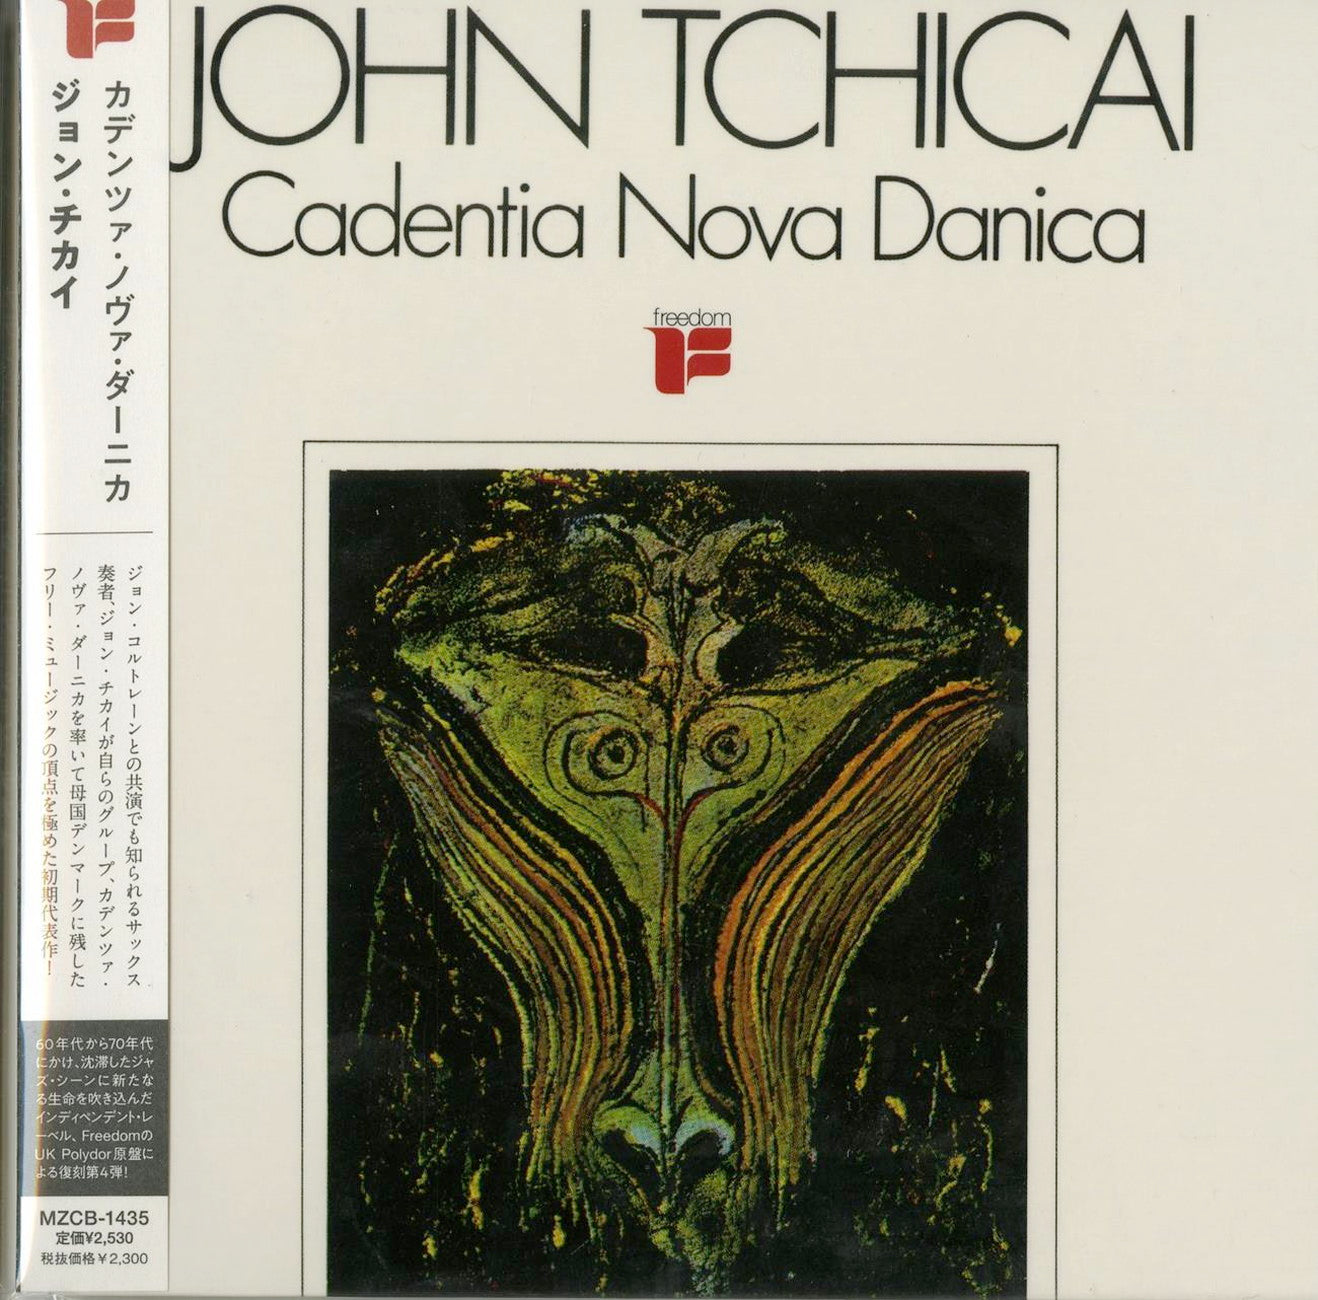 John Tchicai - Cadentia Nova Danica - Japan  Mini LP CD Limited Edition